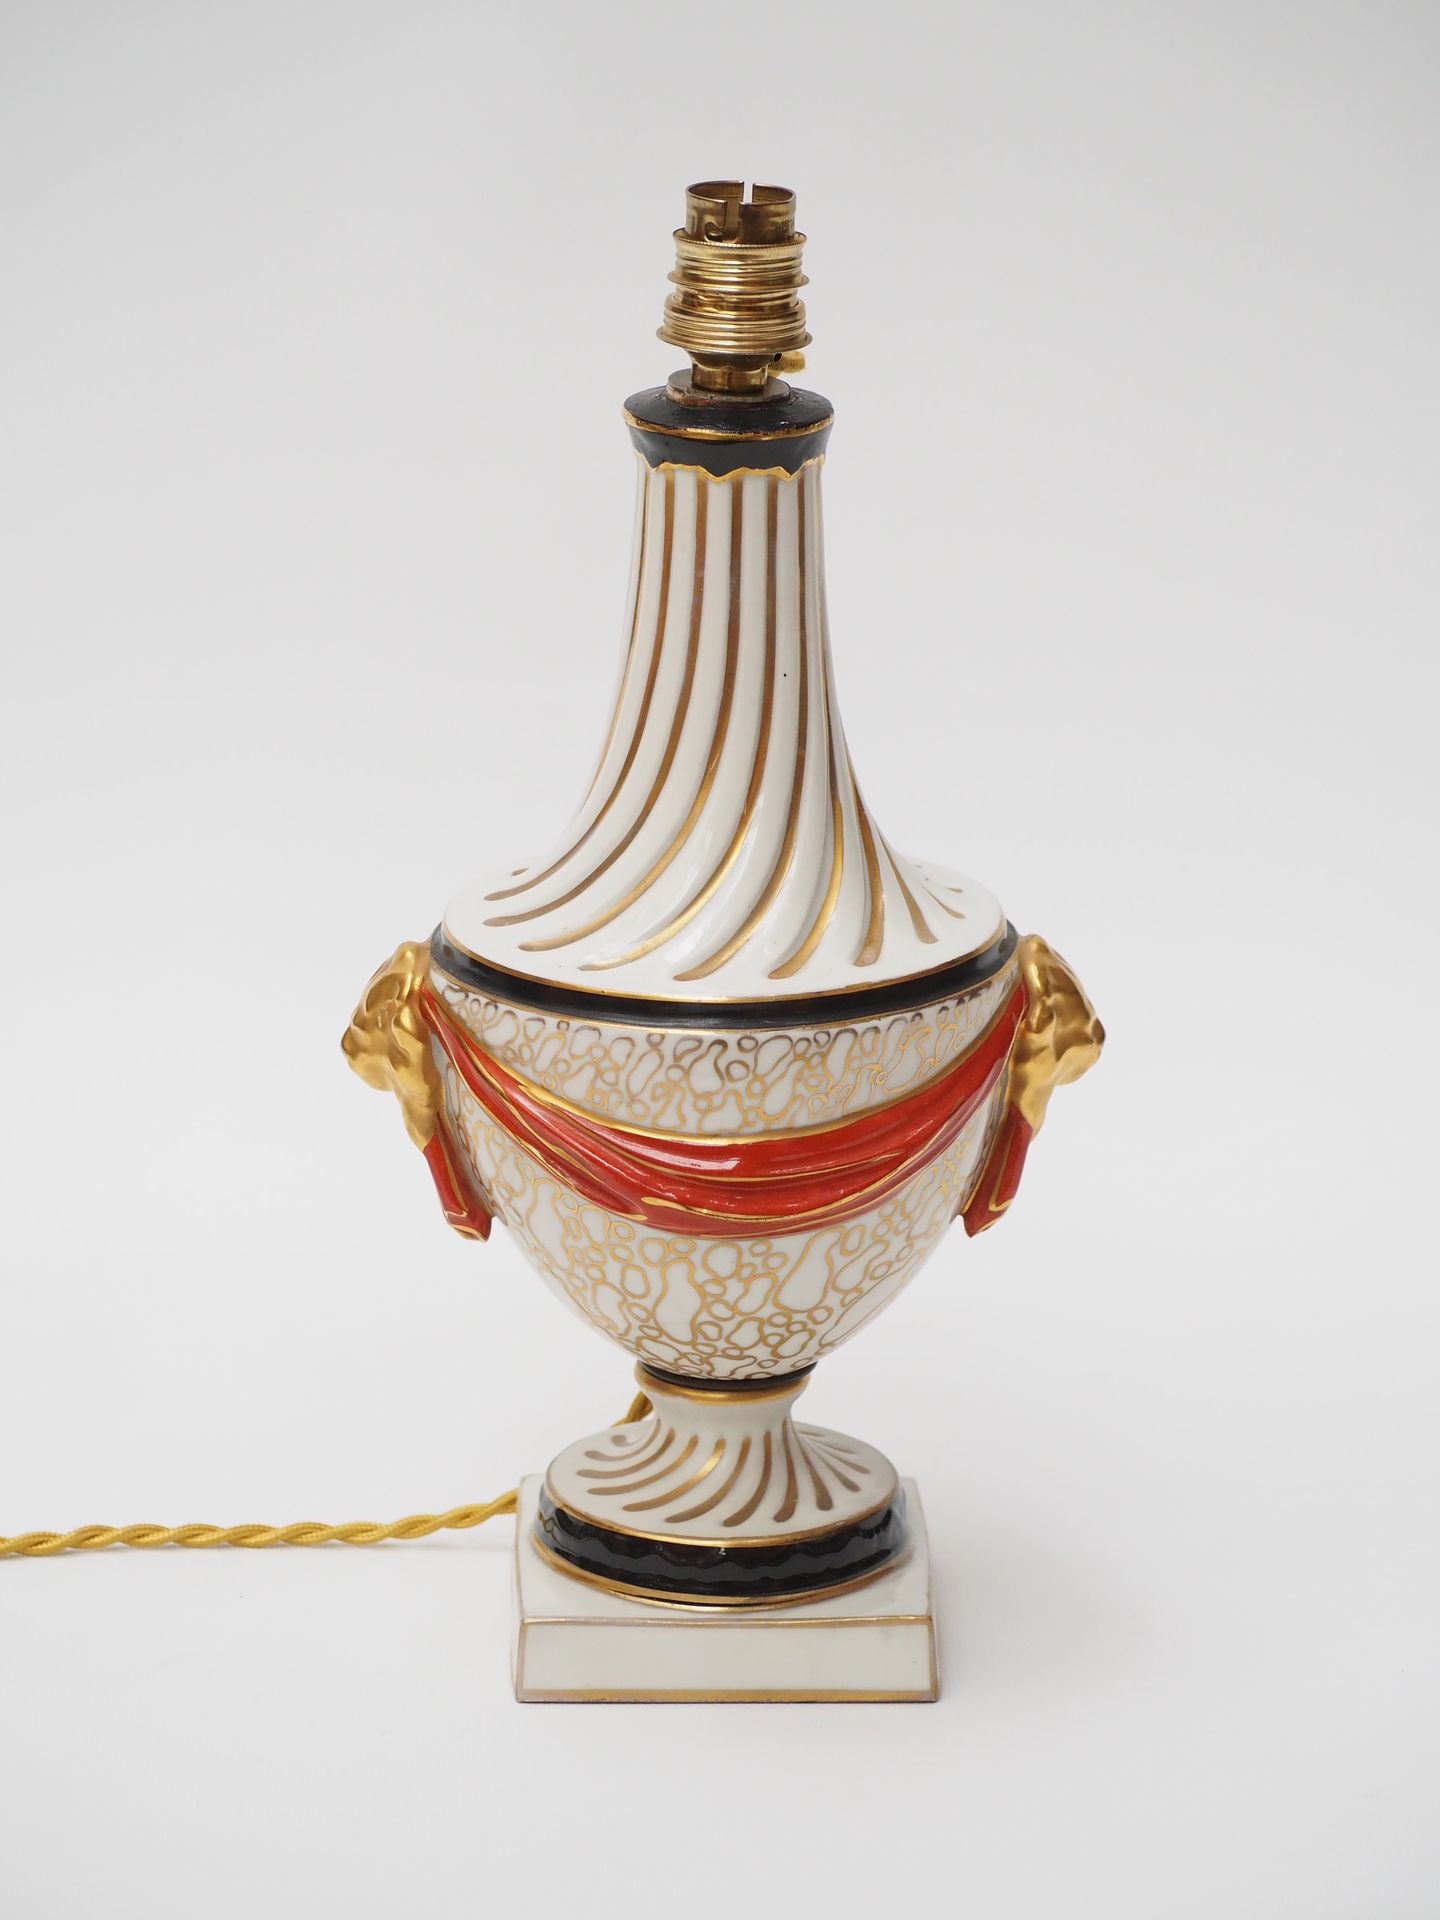 Null PARIS
Polychrome enameled porcelain lamp base with gold highlights, decorat&hellip;